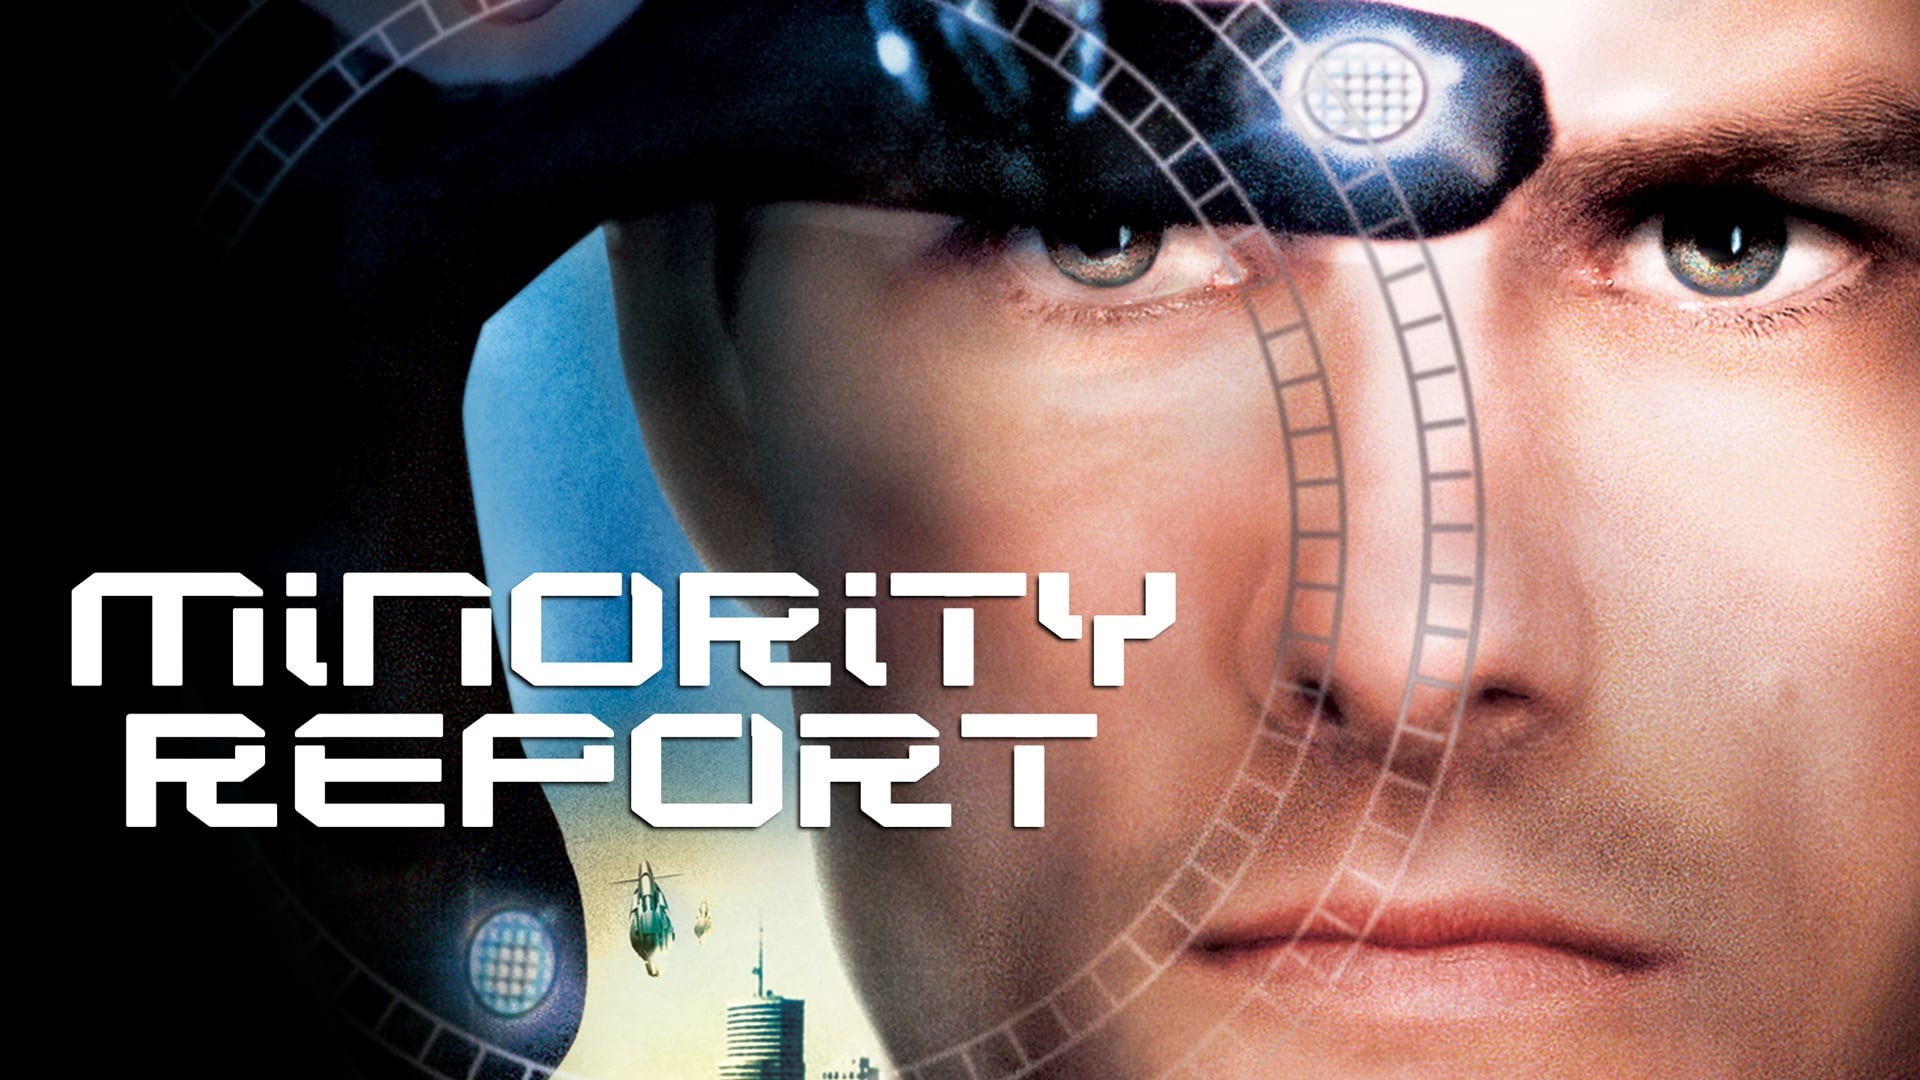 Minority Report, Online movie streaming, HD movies, Crime solving, 1920x1080 Full HD Desktop